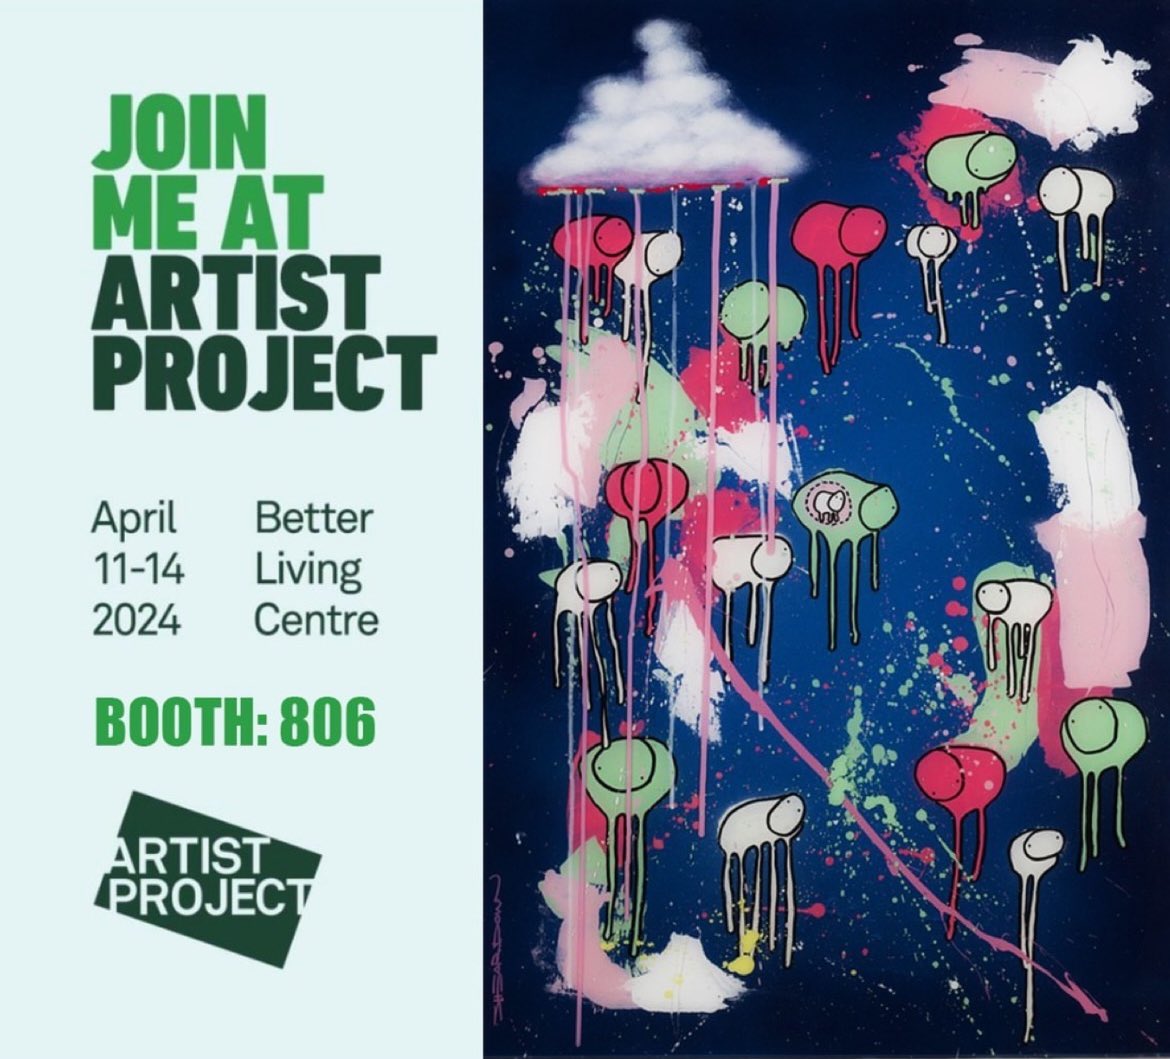 Two weeks to go until @artistprojectto 
April 11 - 14, 2024 
Booth: 806 
#RAININGCOWS #morgansheardown 

#artistproject #artistproject2024 #torontoartistproject #torontoartgallery #torontoartfair